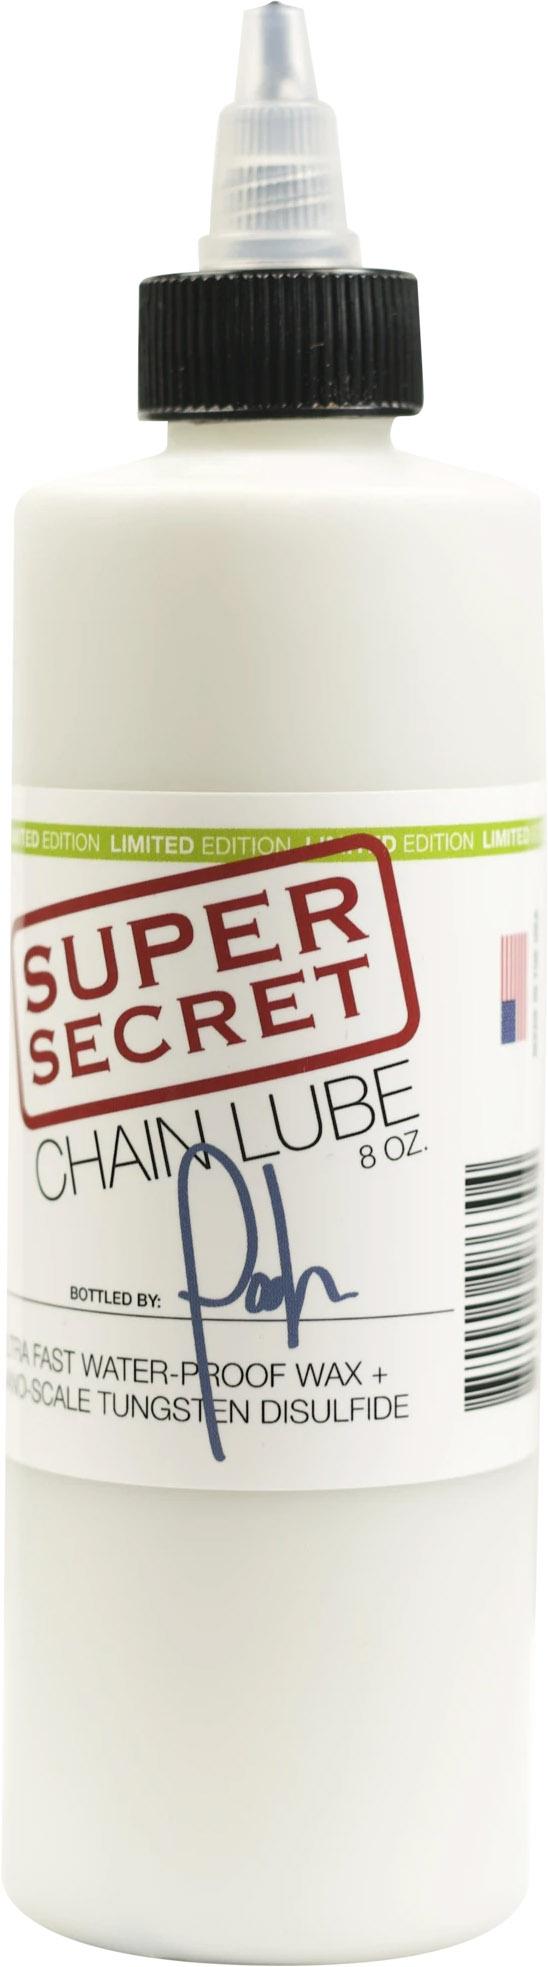 Silca Super Secret Chain Lube - 8oz Bottle  Neutral